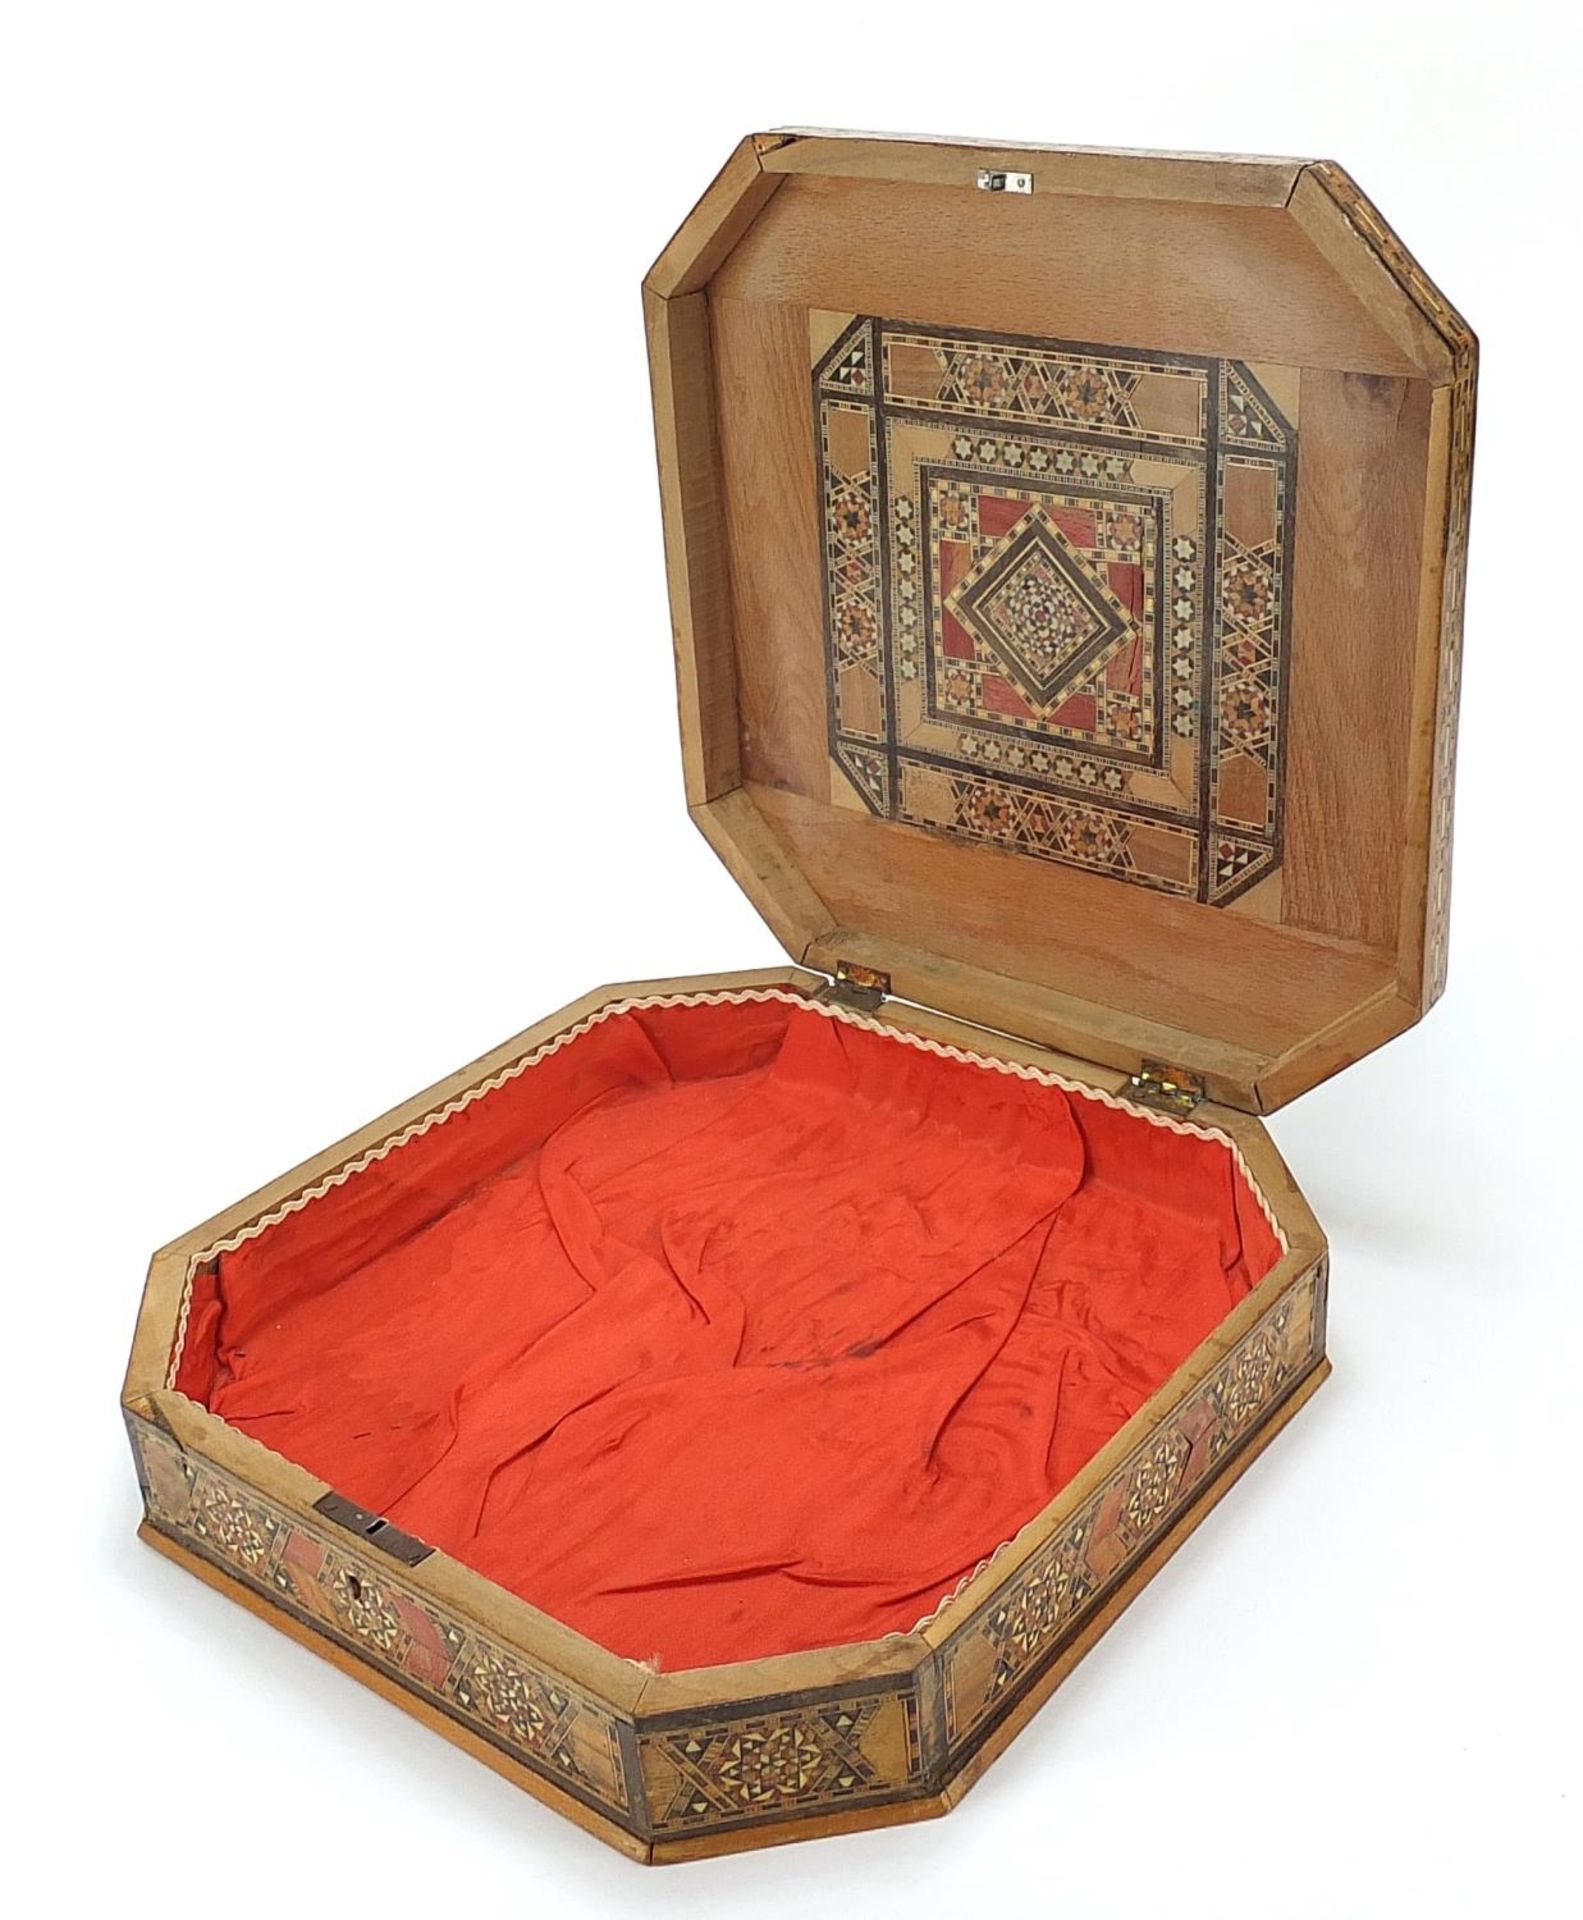 Syrian Moorish design casket with floral inlay, 8.5cm H x 28.5cm W x 29.5cm D - Image 2 of 8